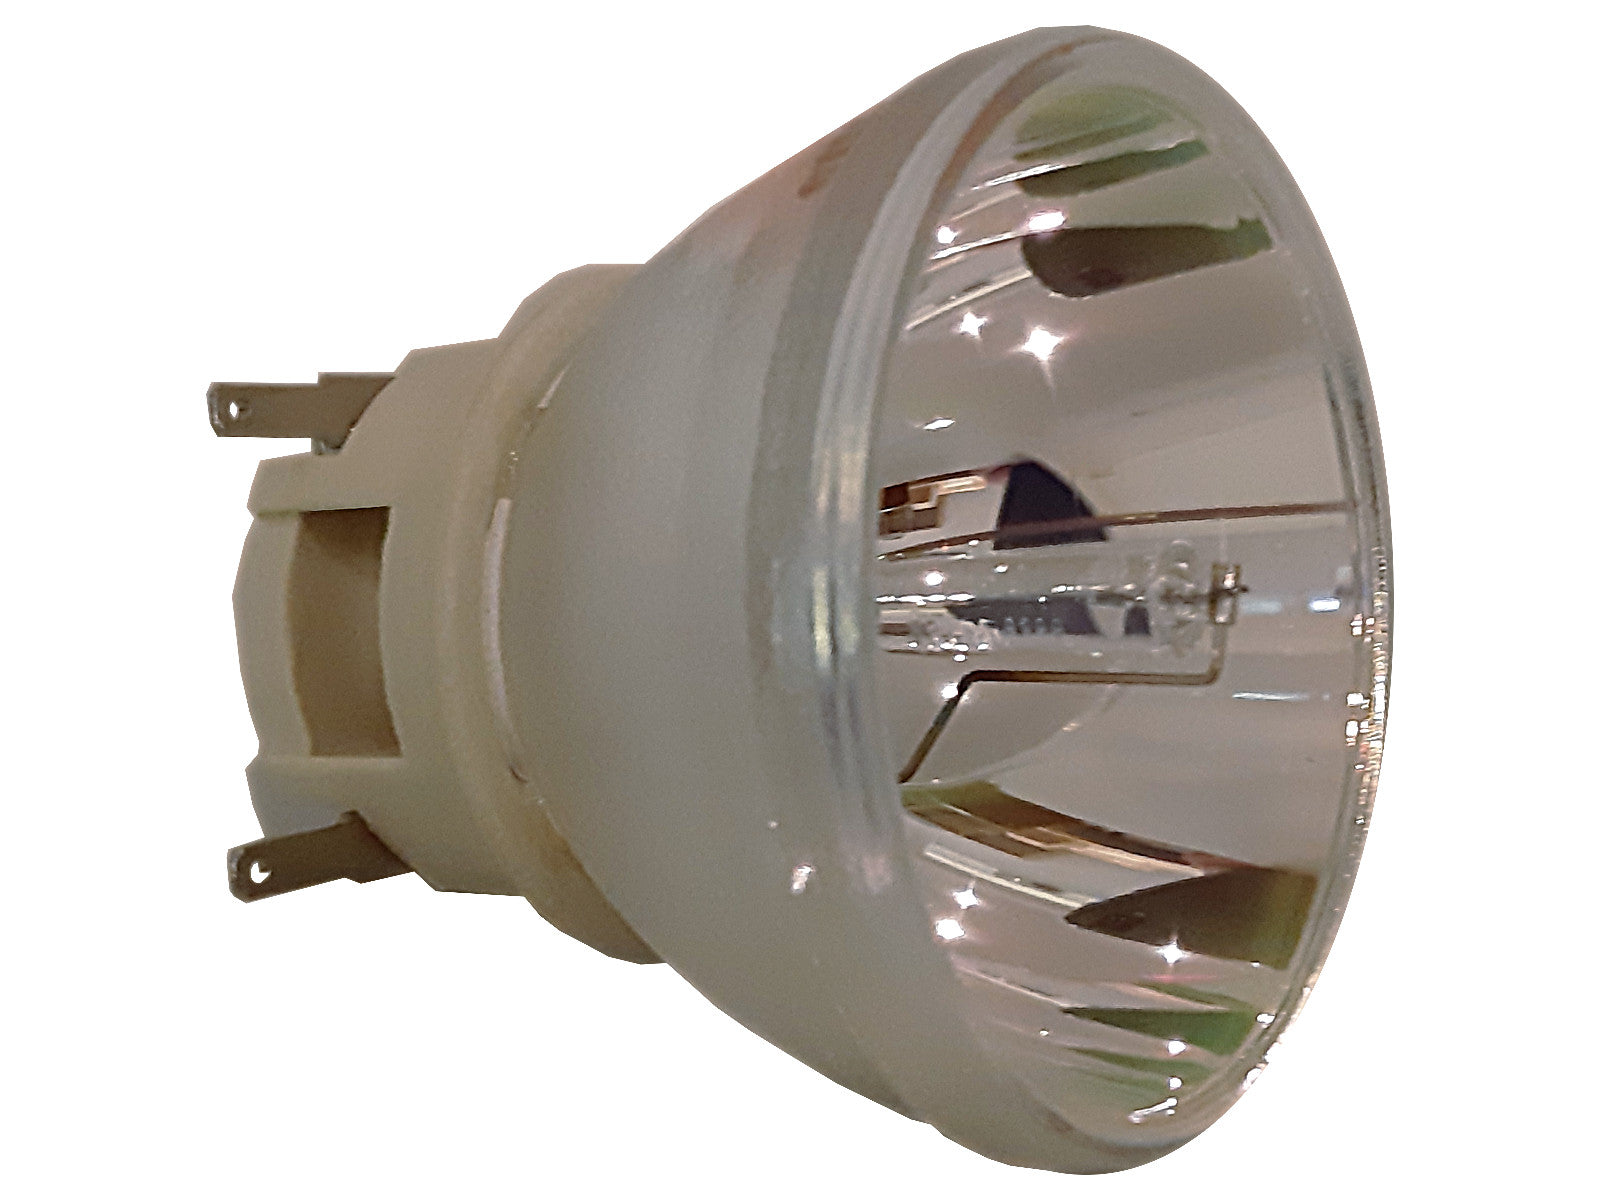 PHILIPS Beamerlampe für ACER UC.JR711.002, MC.JR711.008, MC.JQH11.005 - Bild 1